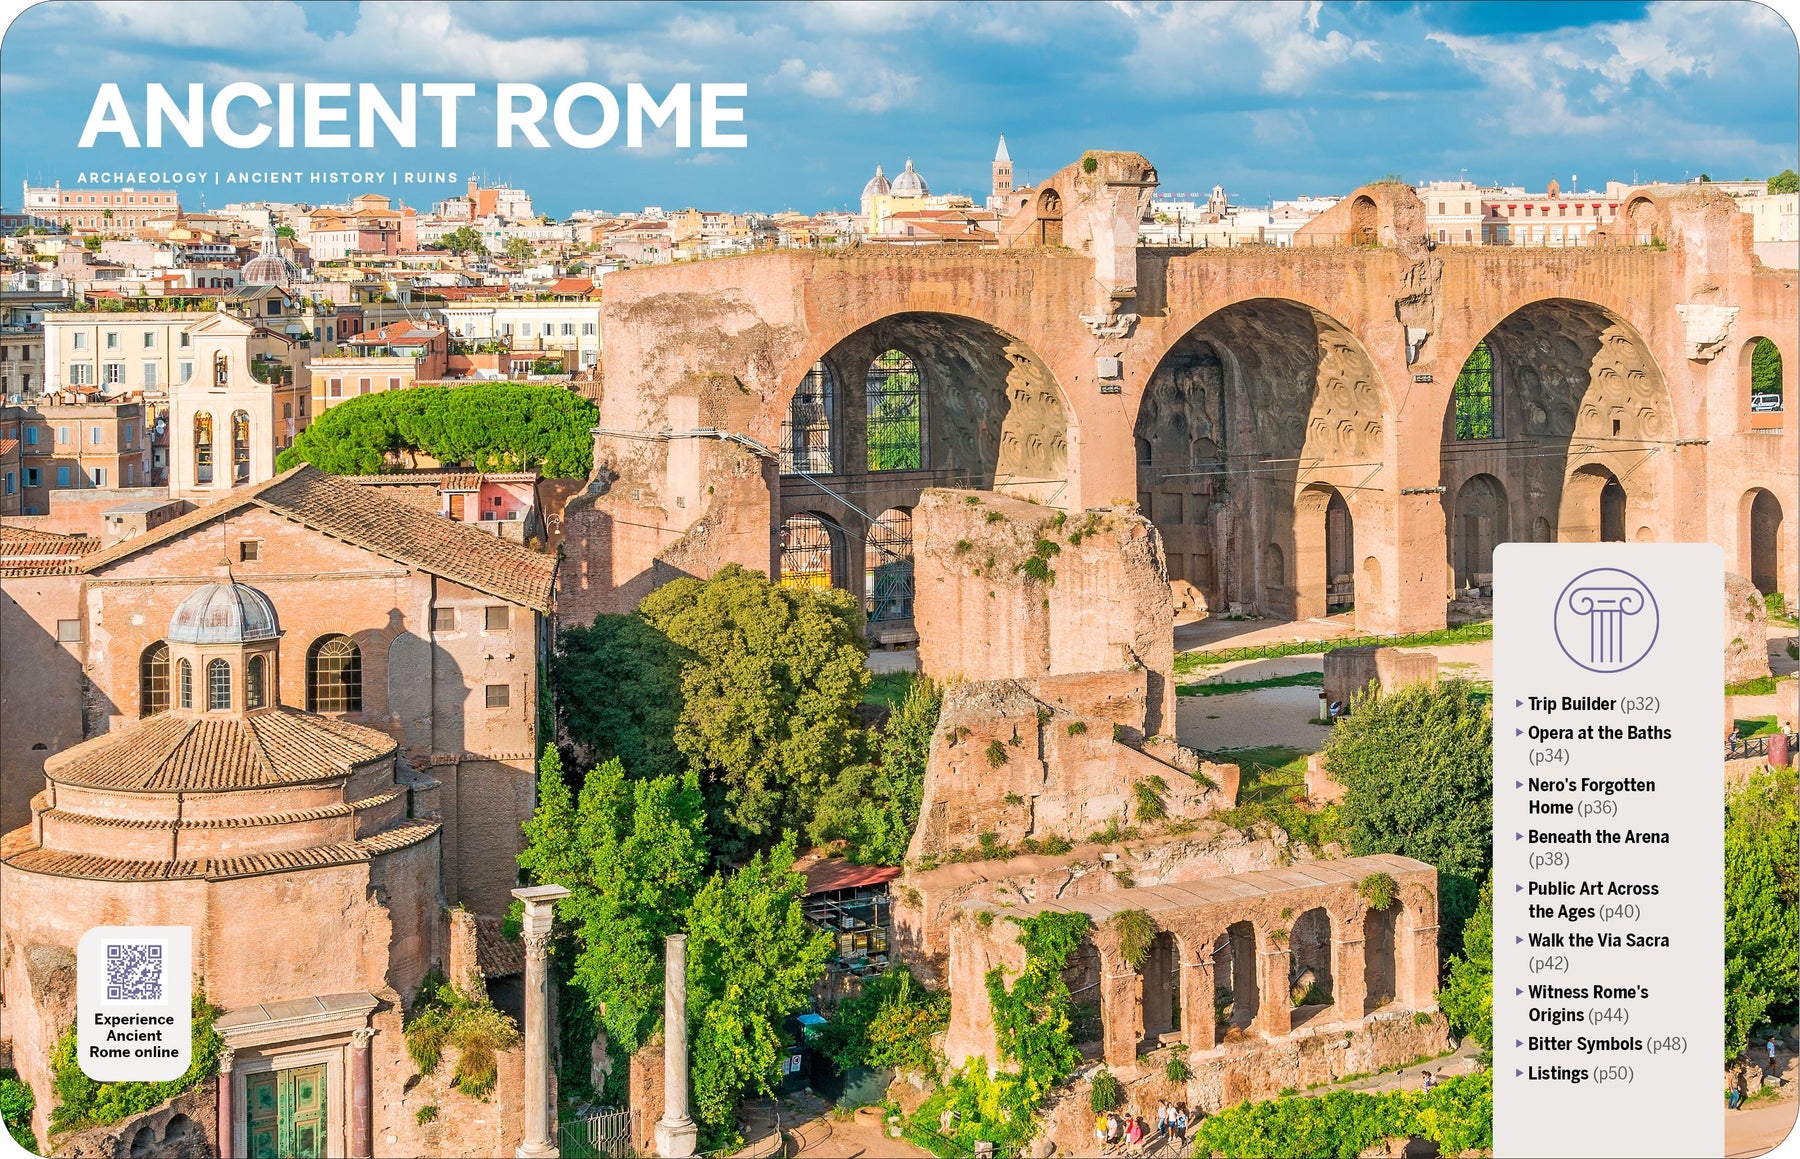 Experience Rome - Book + eBook